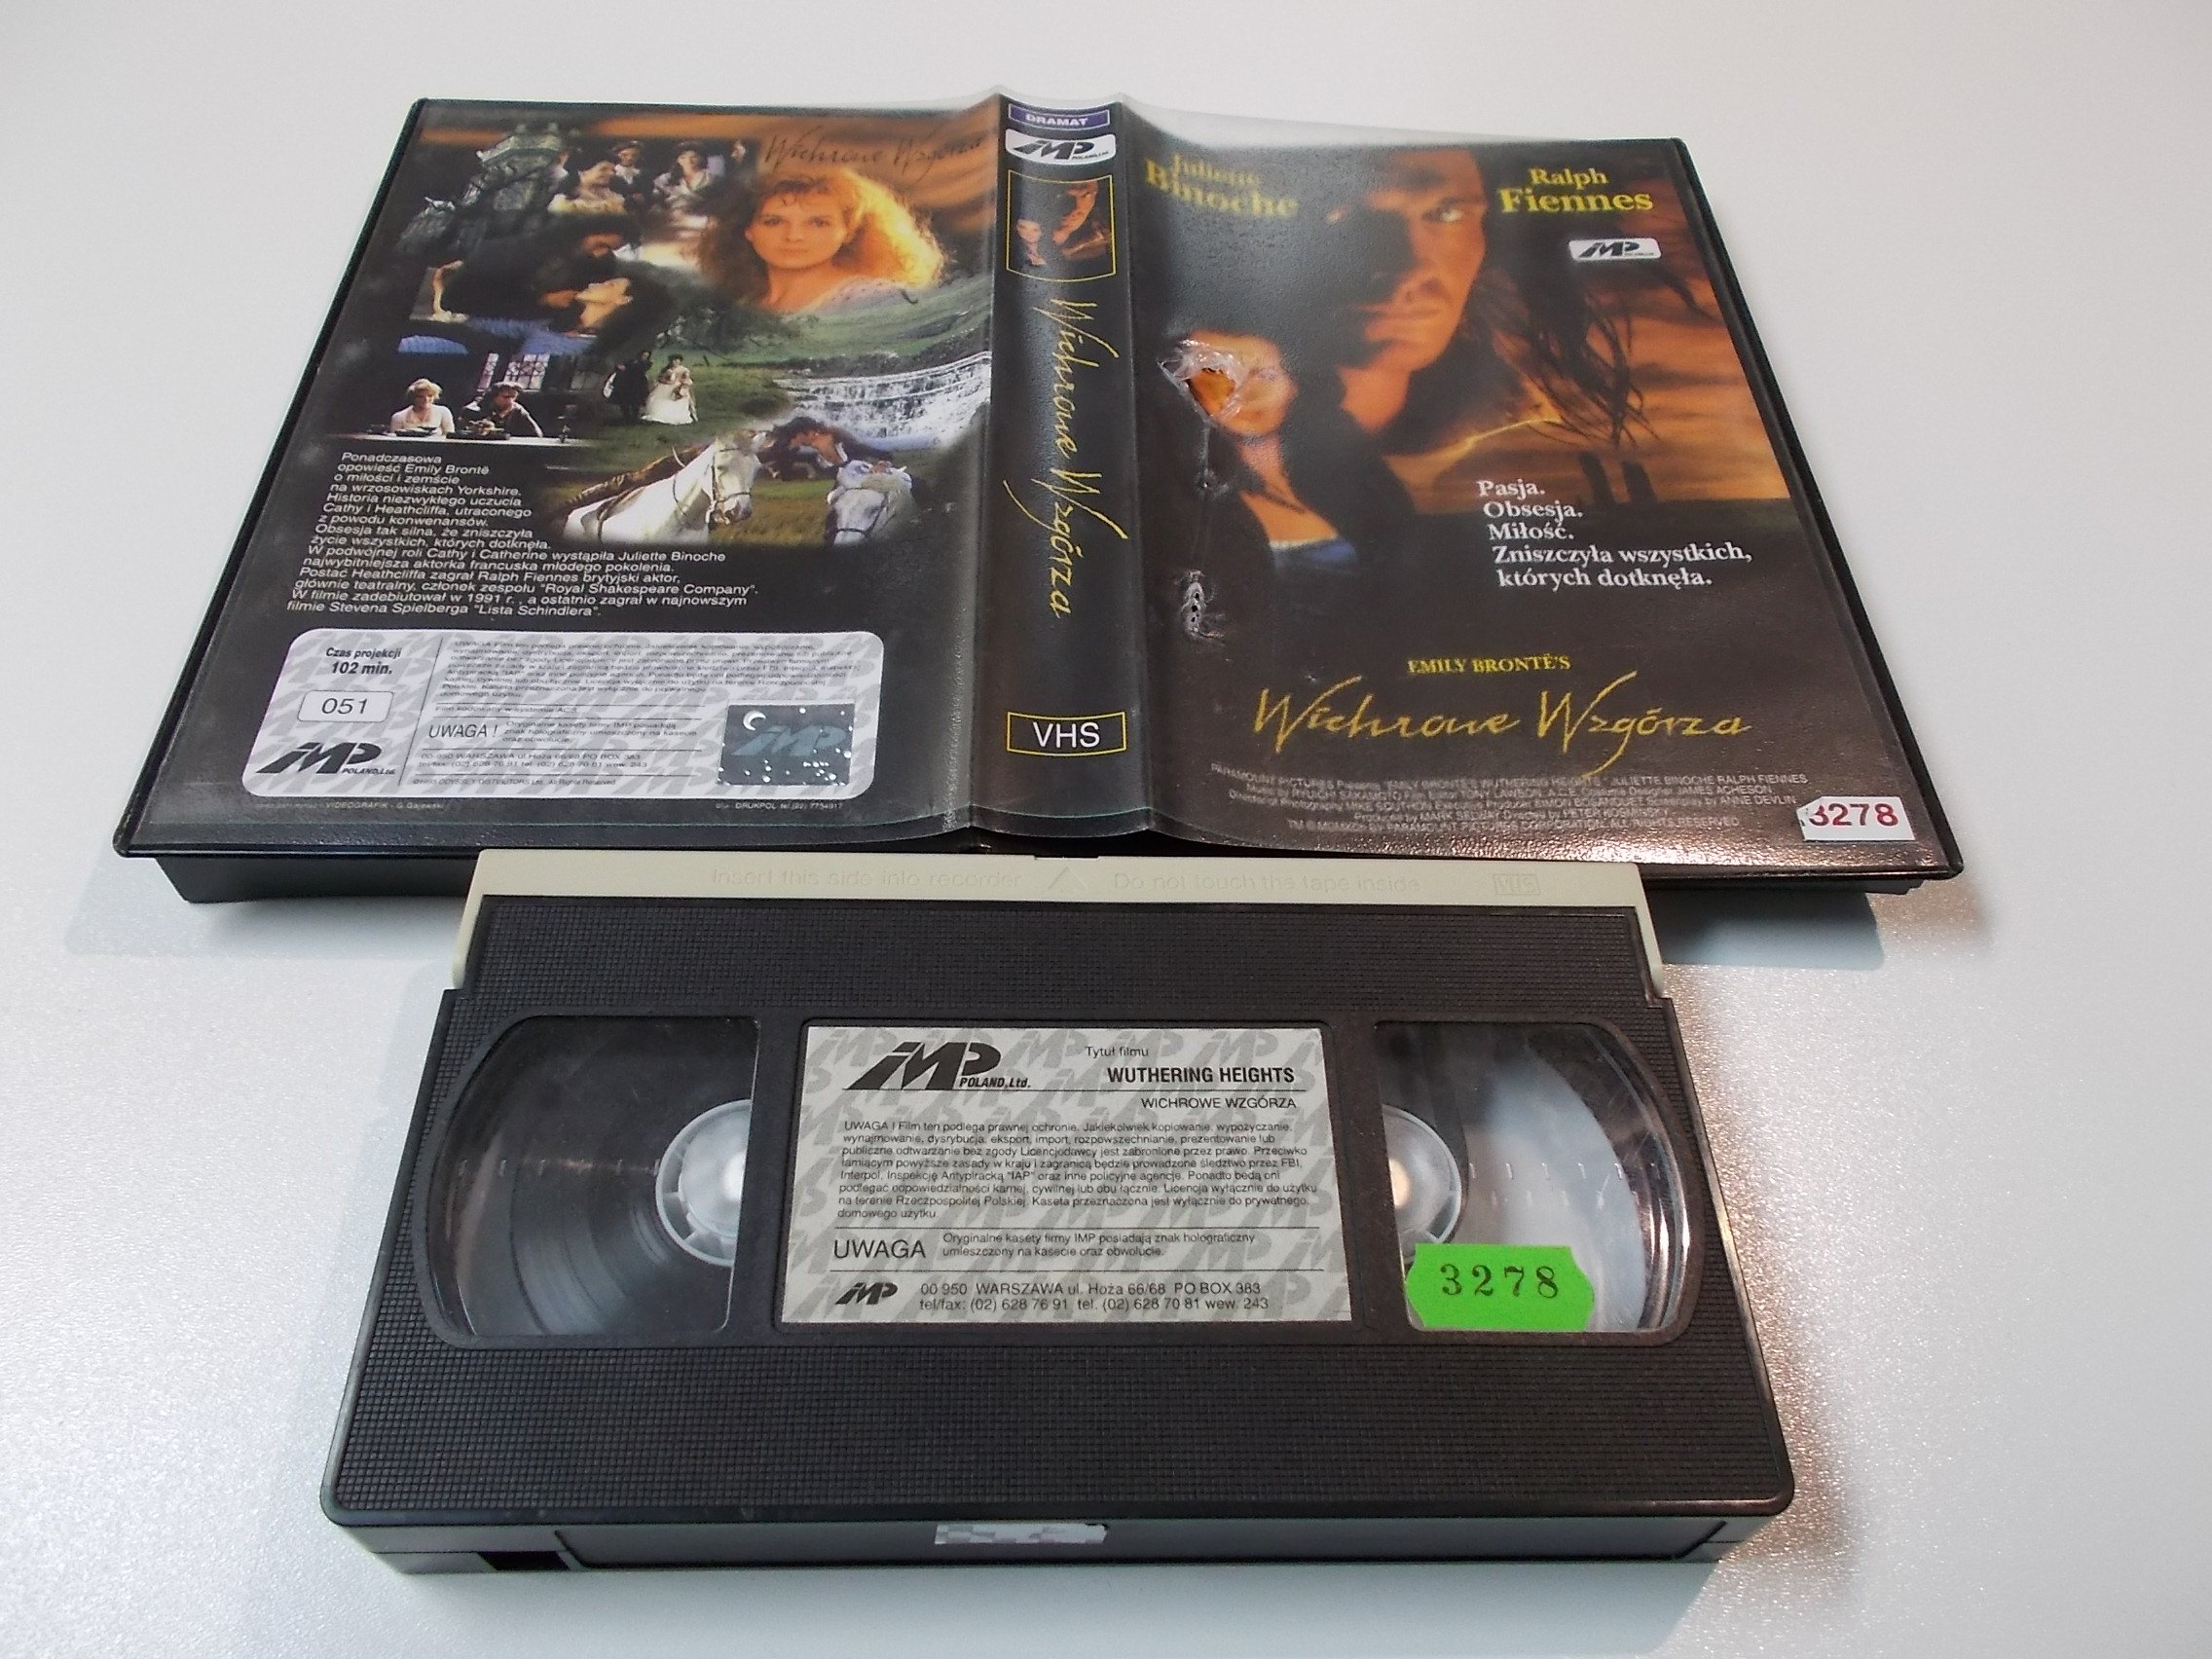 WICHROWE WZGÓRZA - kaseta Video VHS - 1421 Sklep 